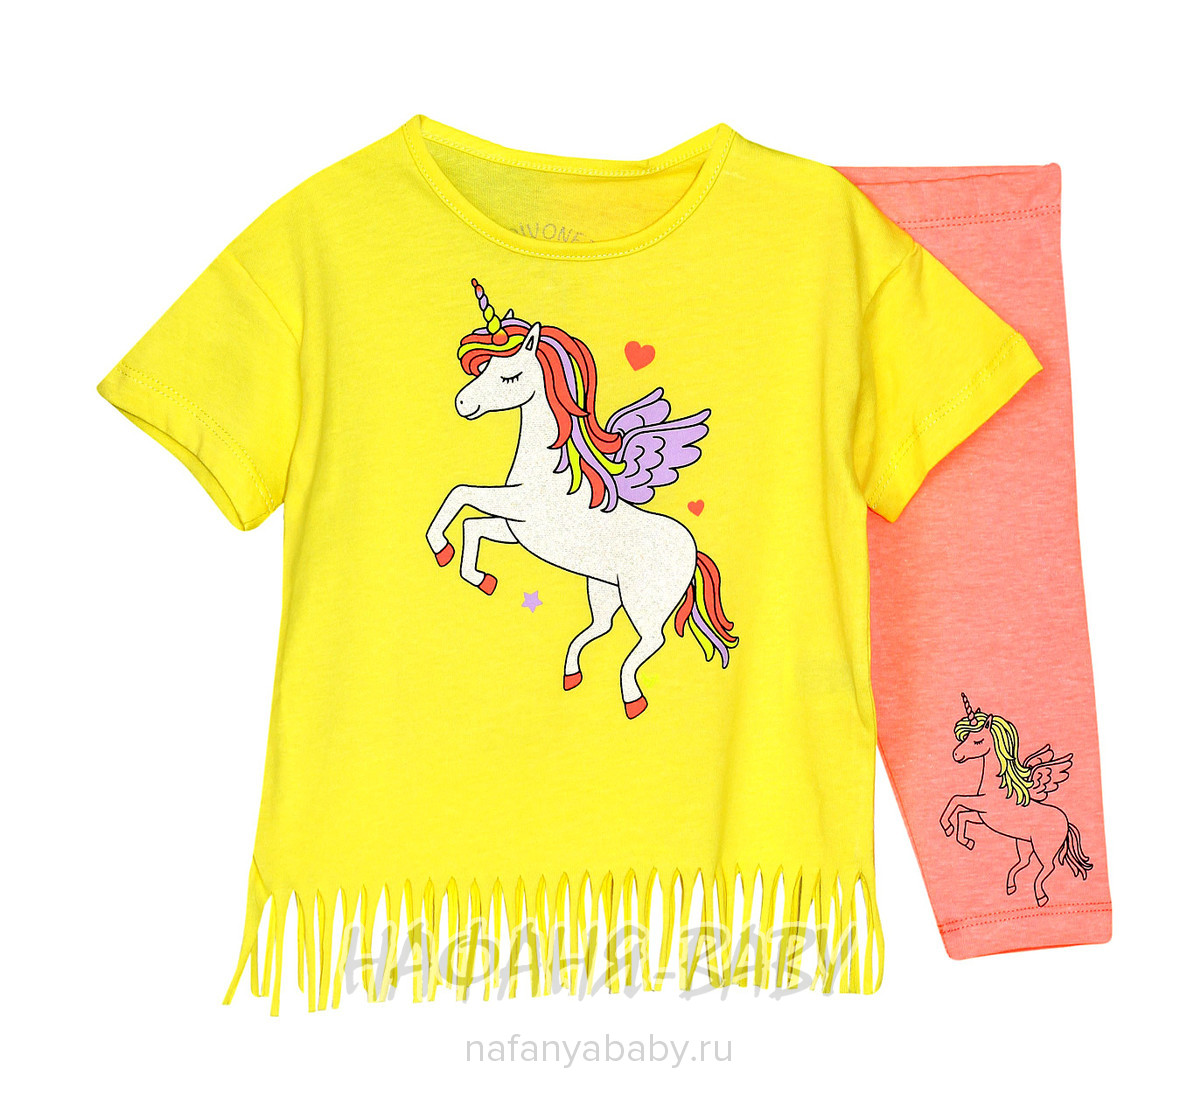 Детский костюм (футболка+лосины) DIVONETTE арт: 9376, 1-4 года, цвет желтый, оптом Турция